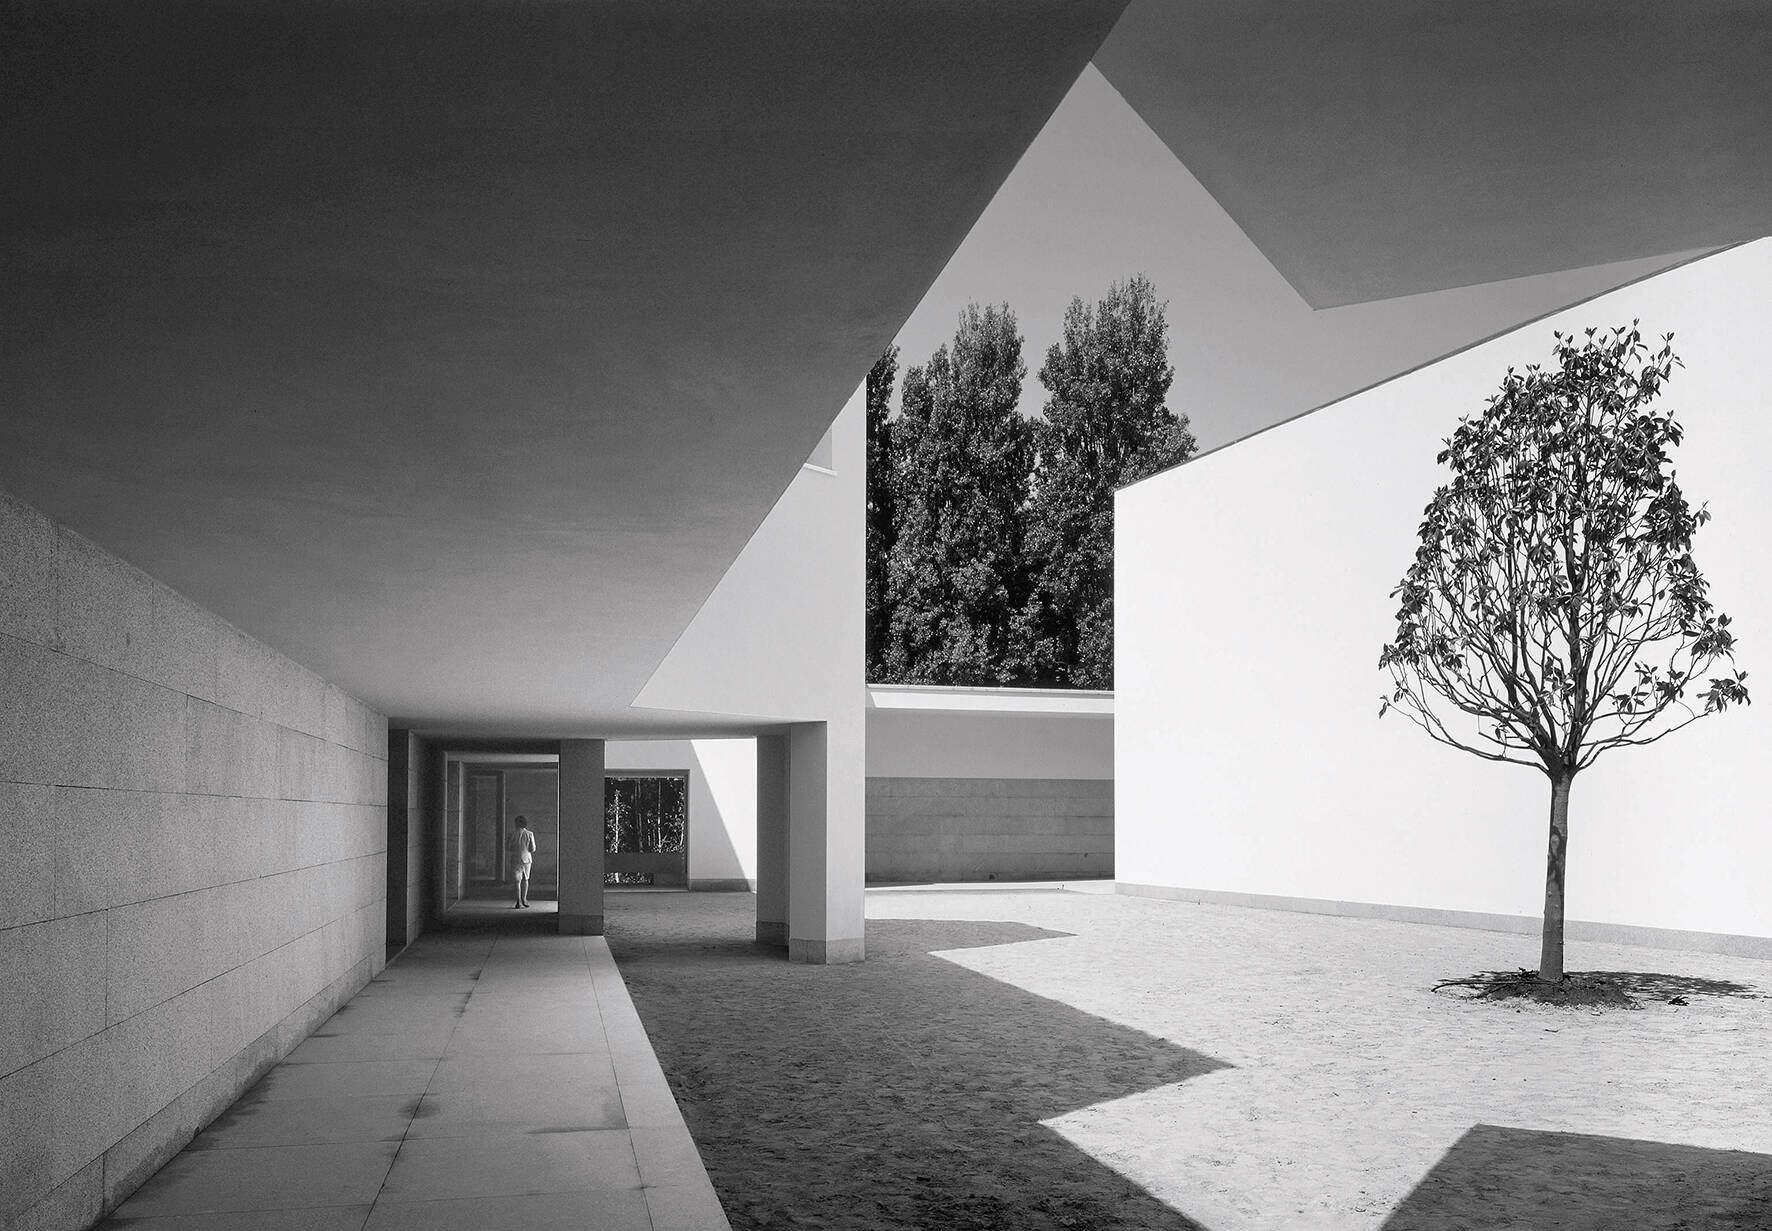 Duccio Malagamba on how he photographs Álvaro Siza buildings